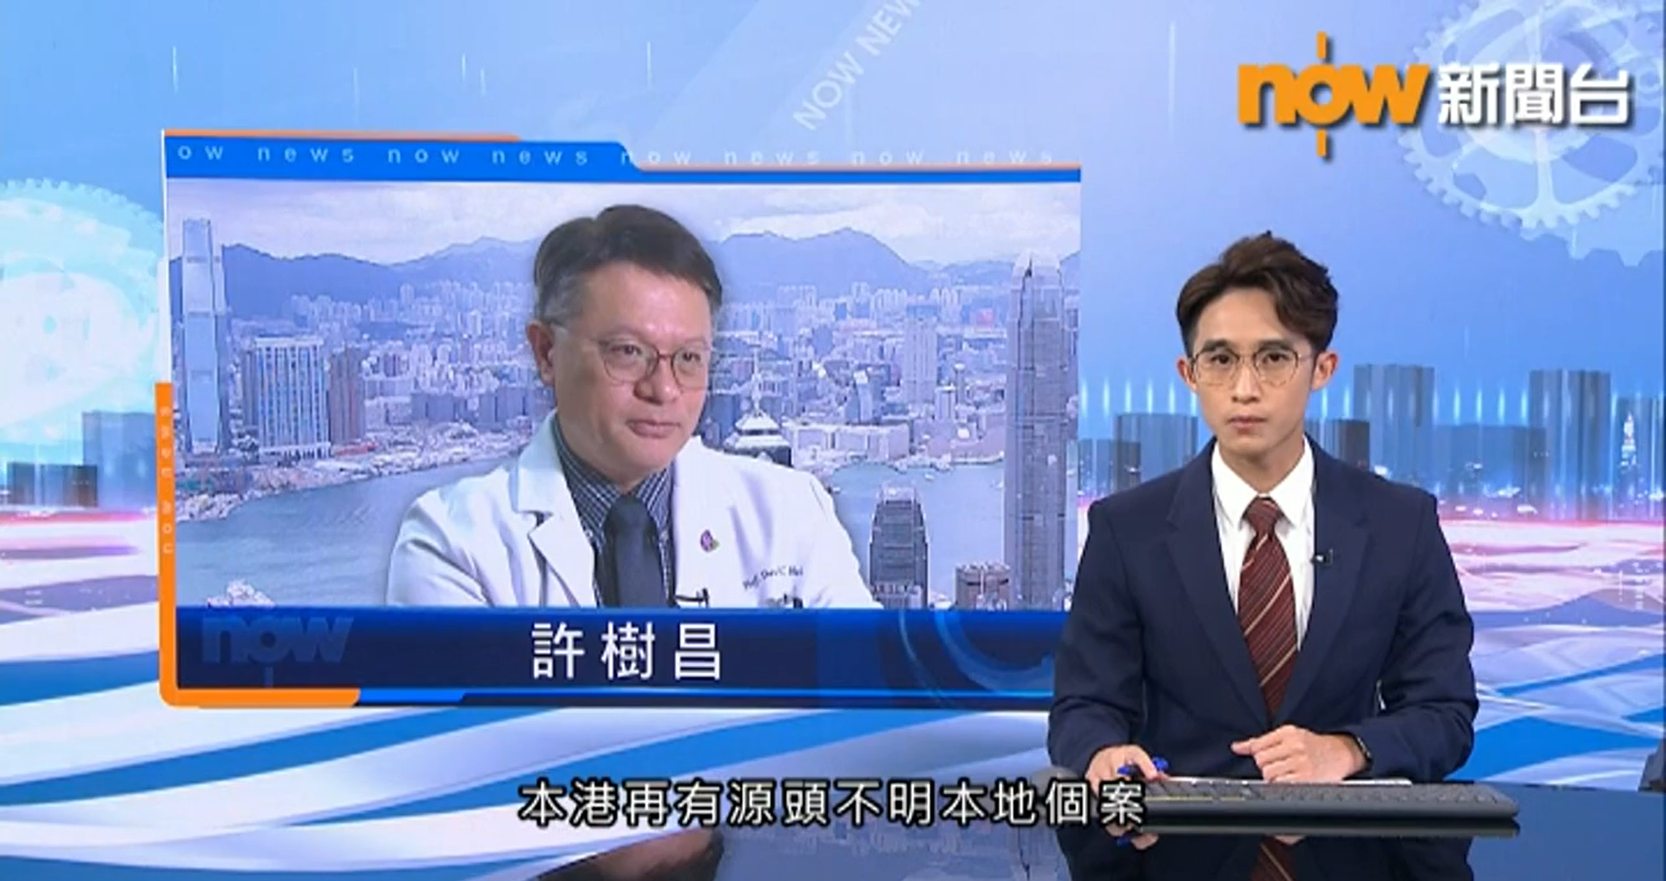 CU Medicine featured in Now TV